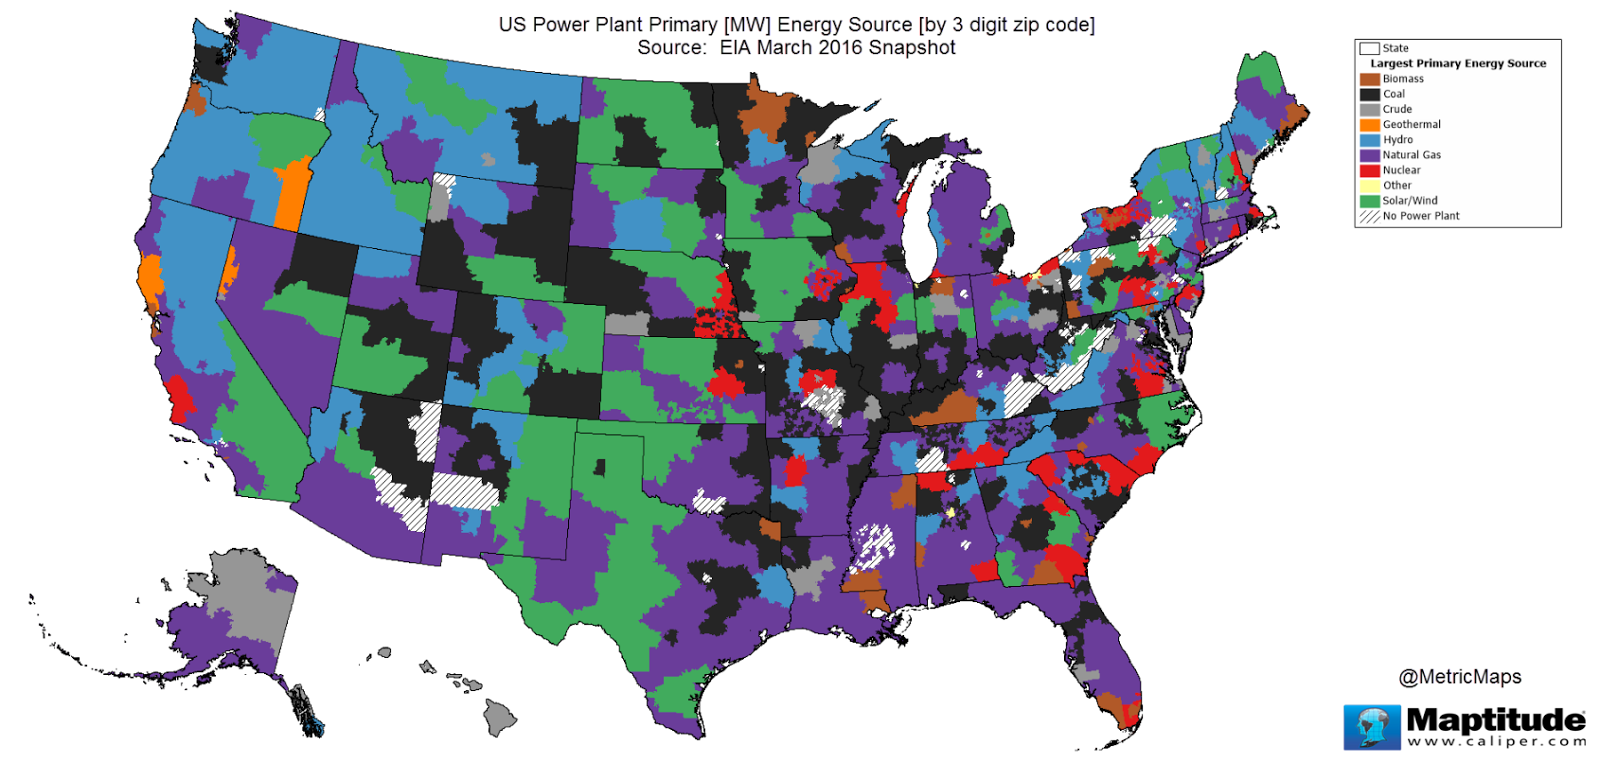 USA power plant primary energy source